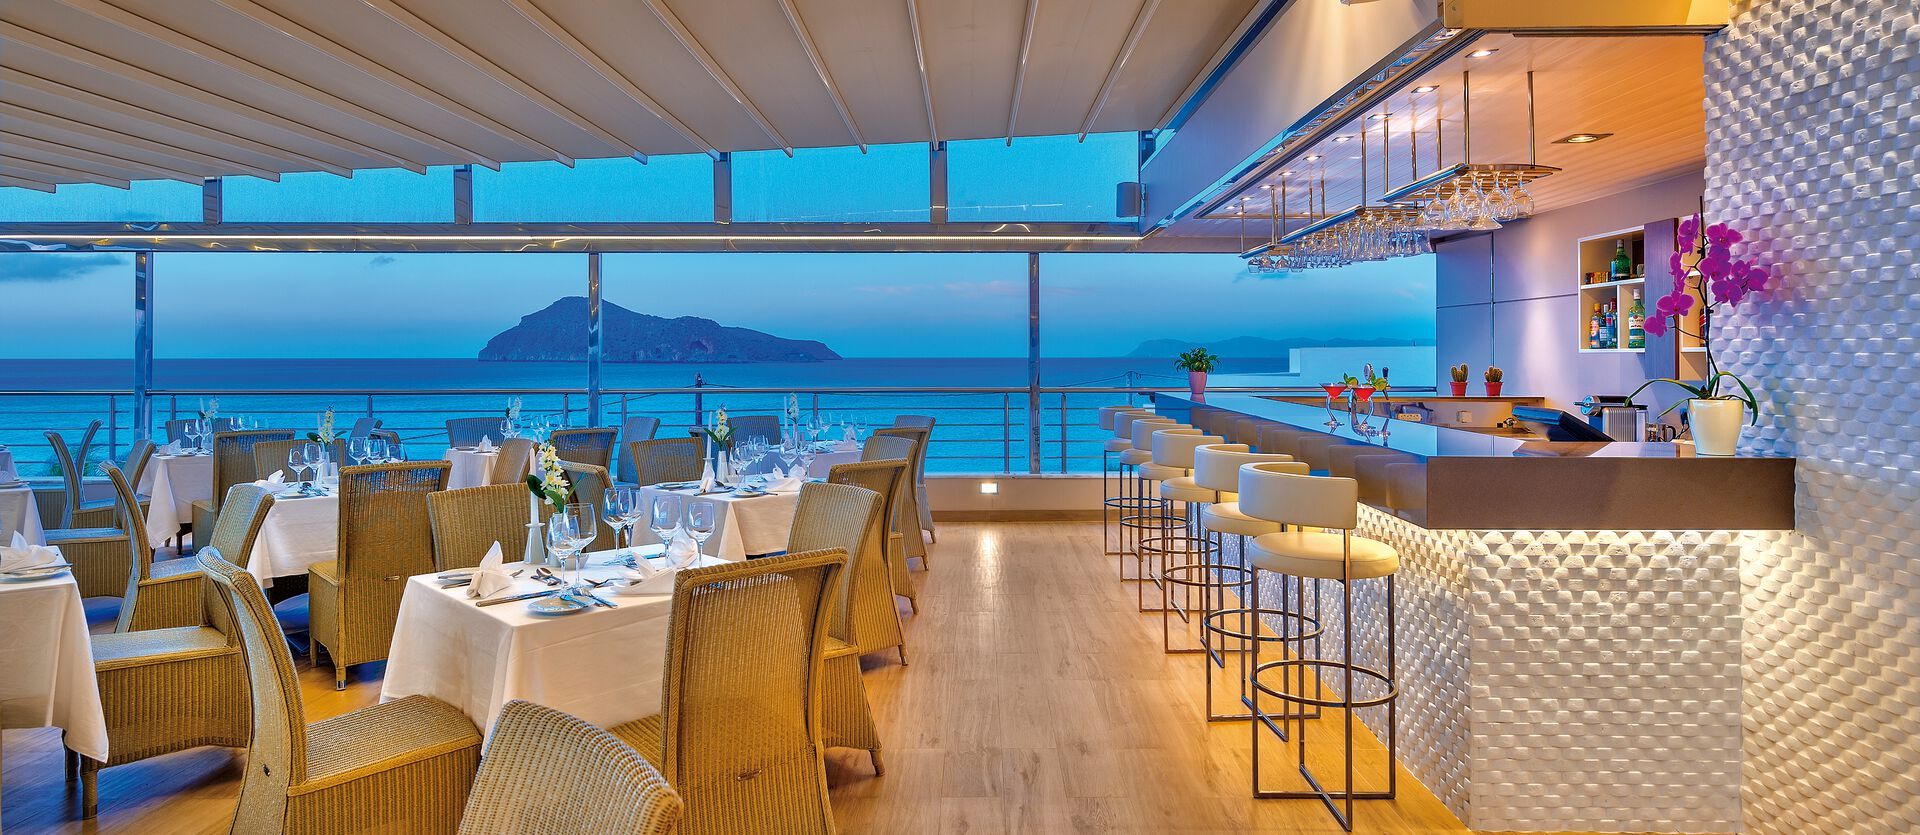 Crète - La Canée - Grèce - Iles grecques - Hôtel Porto Platanias Beach Resort & Spa 5*